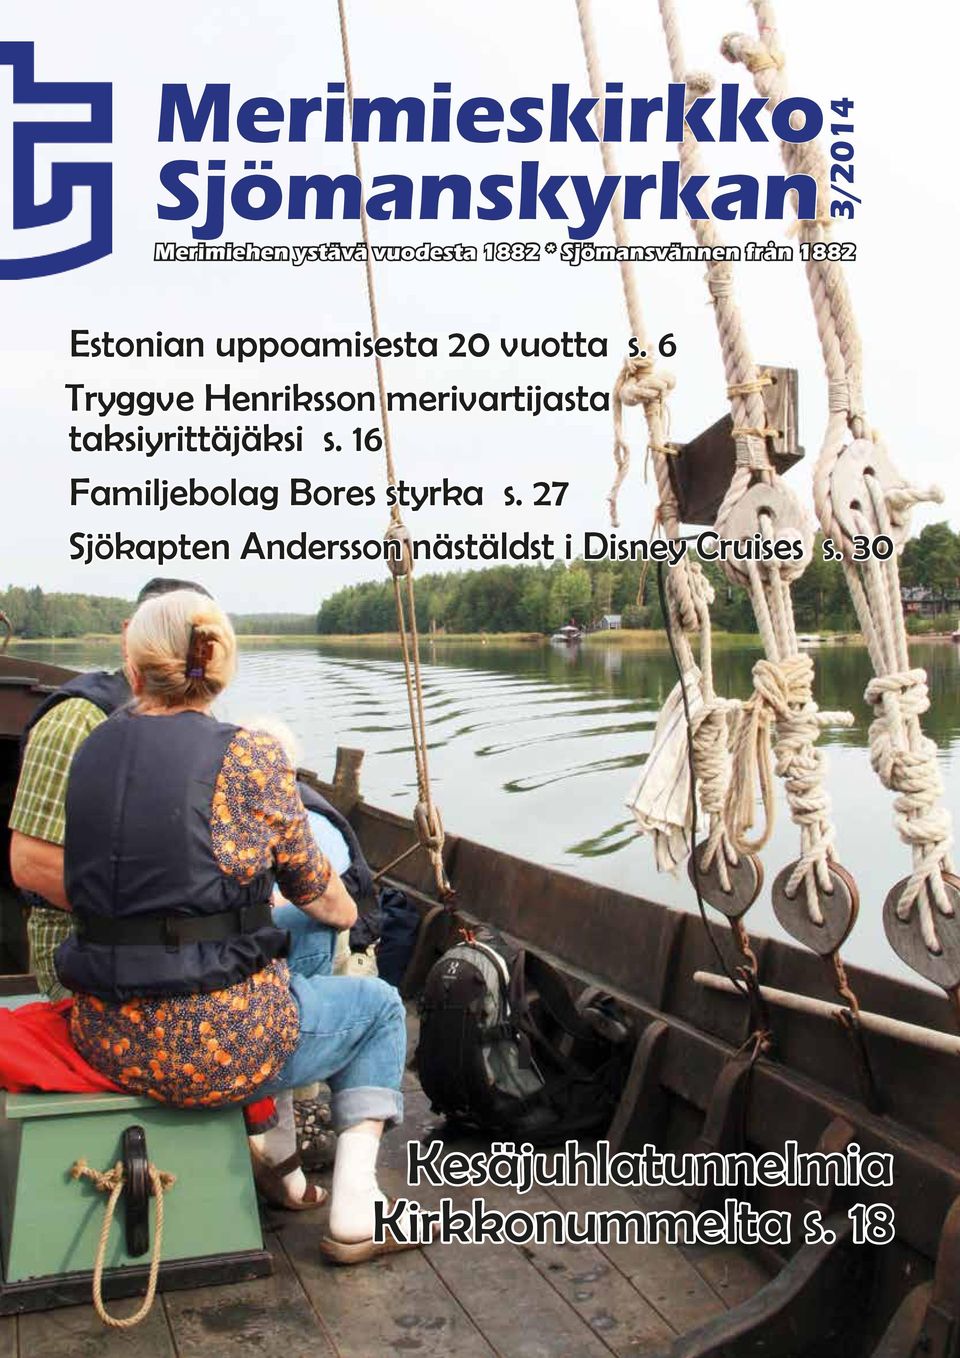 6 Tryggve Henriksson merivartijasta taksiyrittäjäksi s.